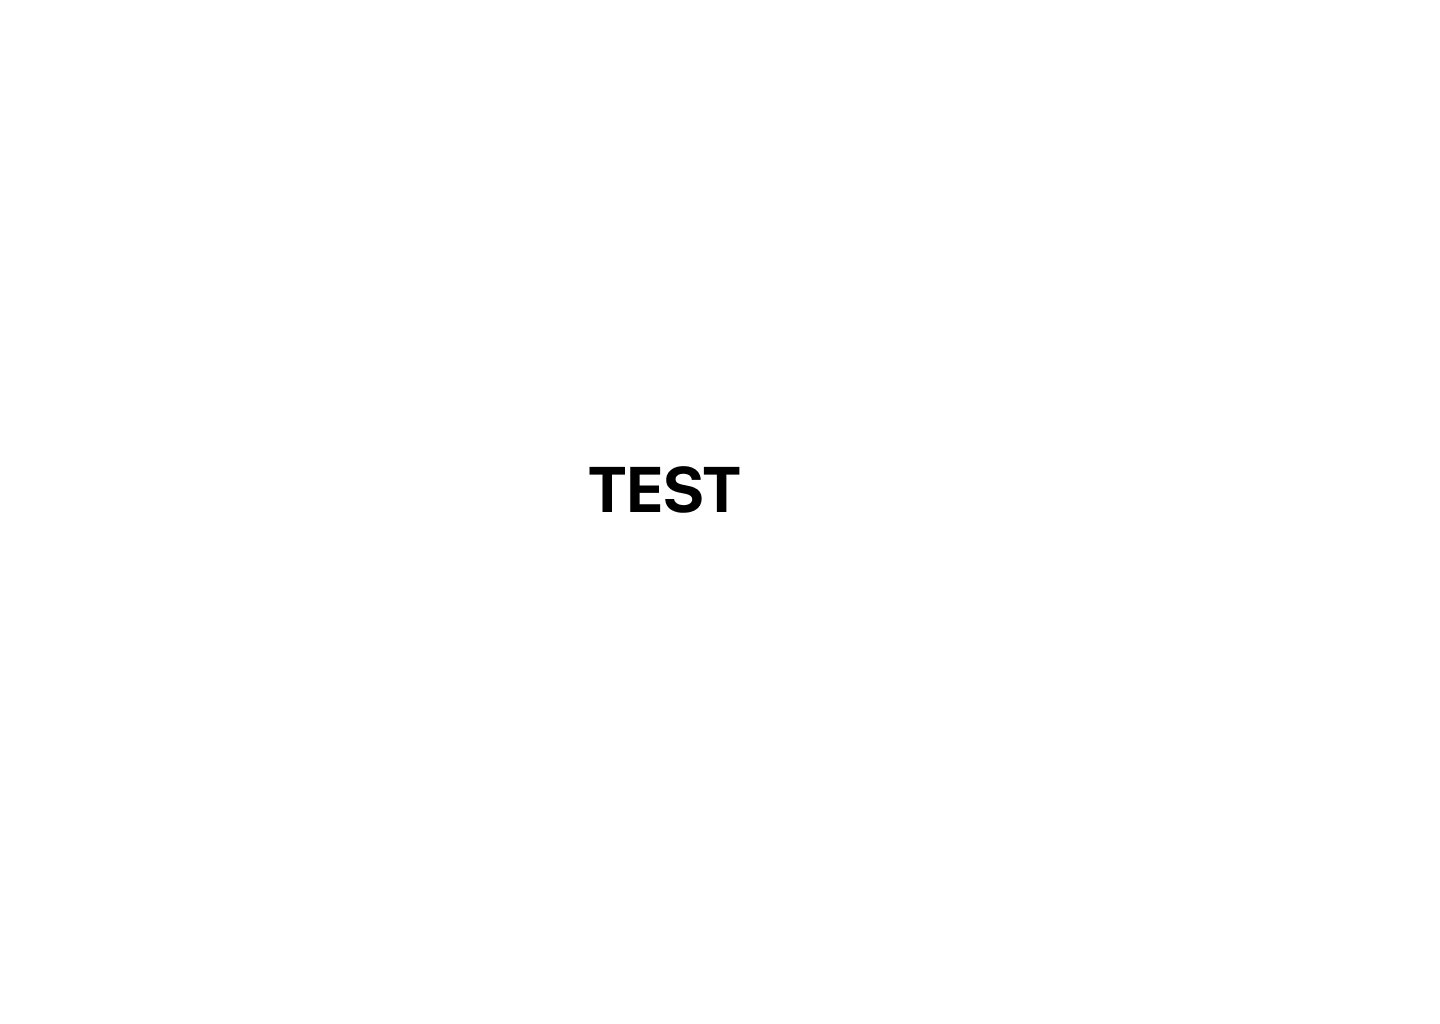 Test - 1's image